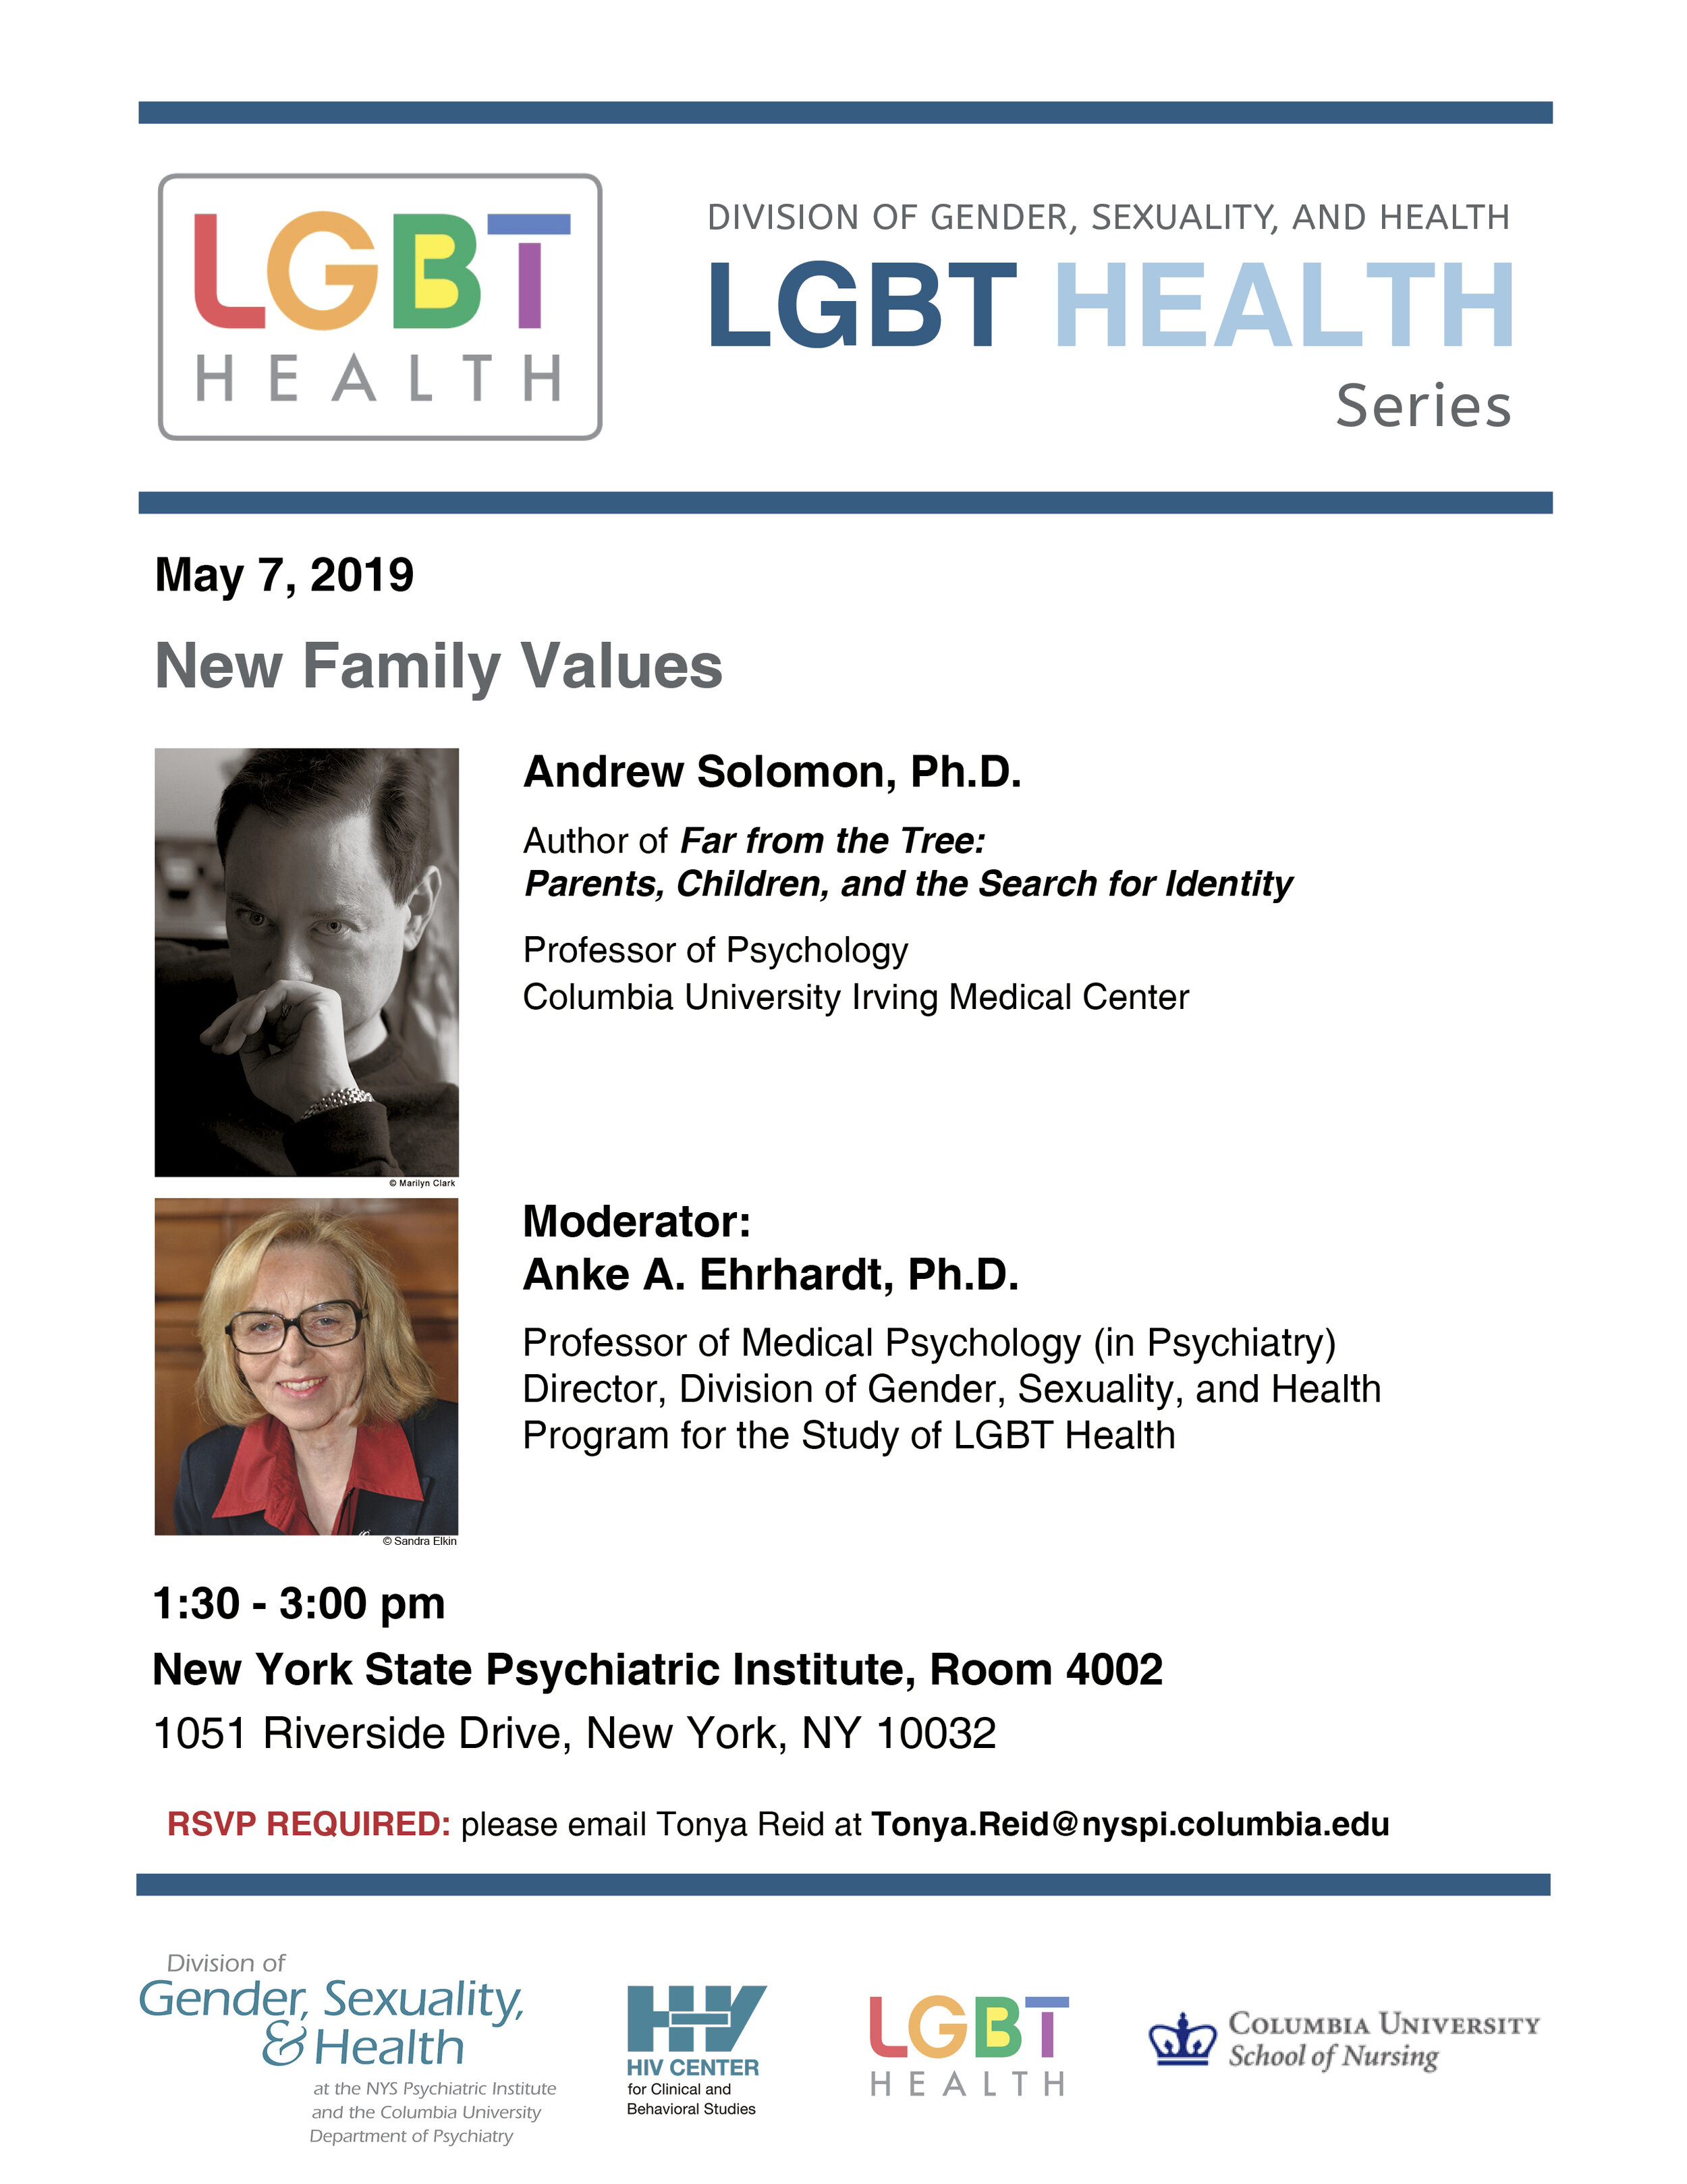 LGBT Health Series May 7 2019.jpg